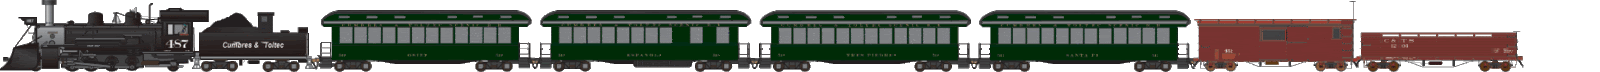 C&TS Train No. 2